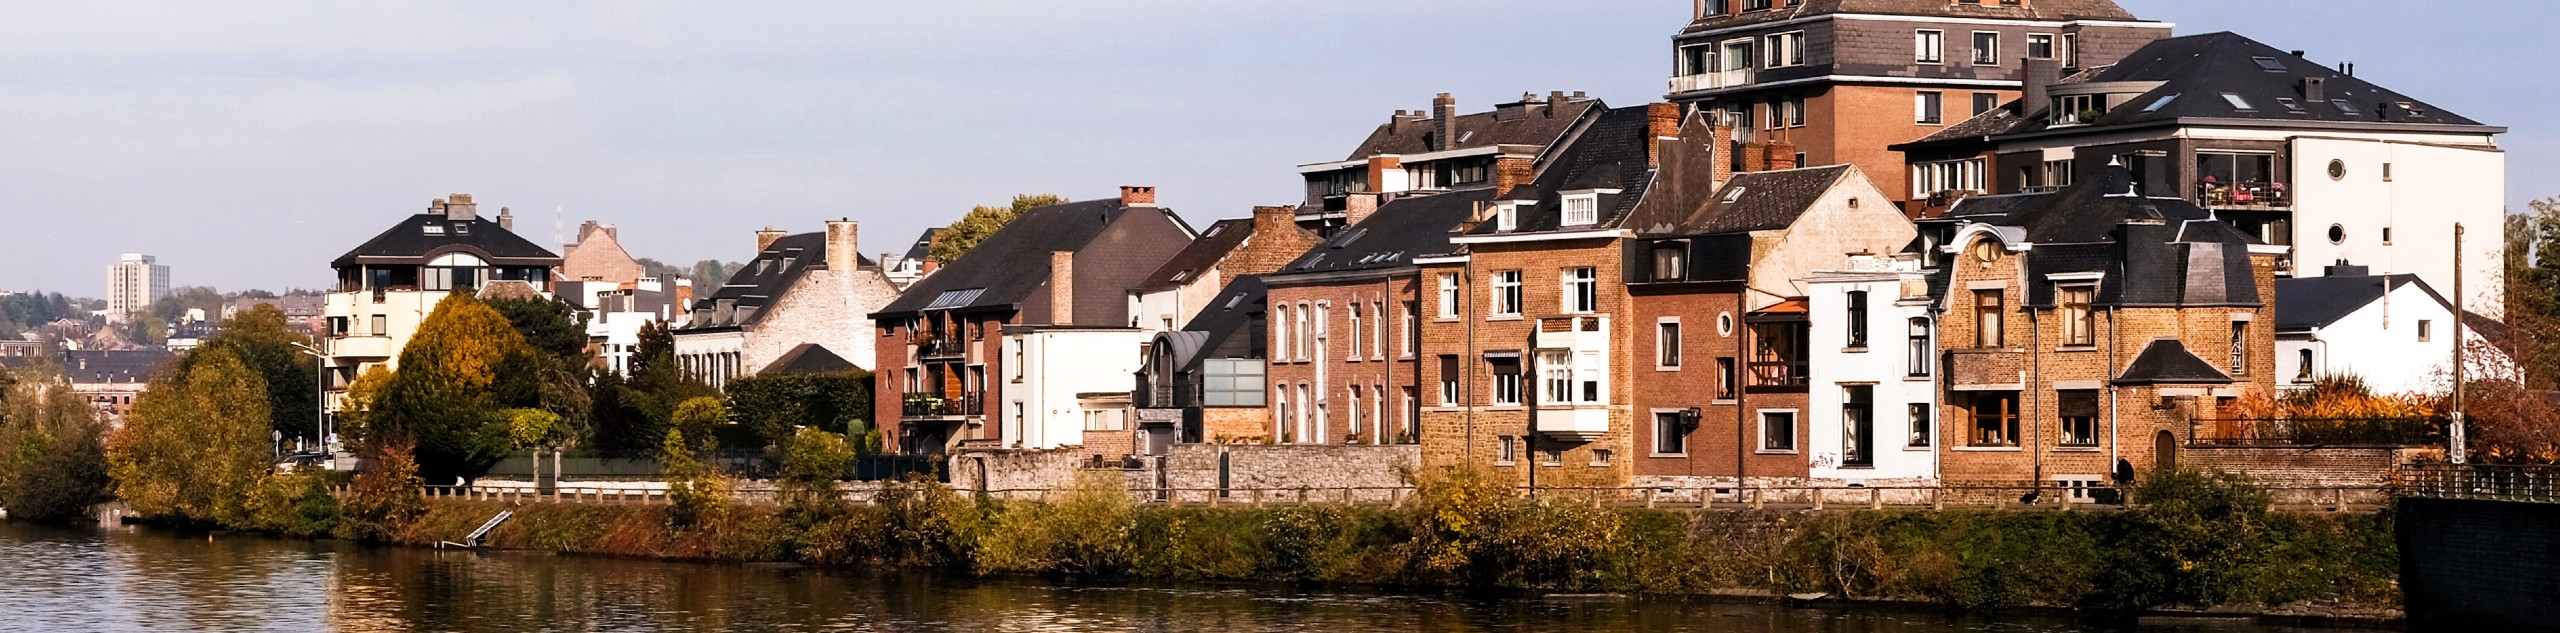 Buildings along the river in Wallonia, Belgium